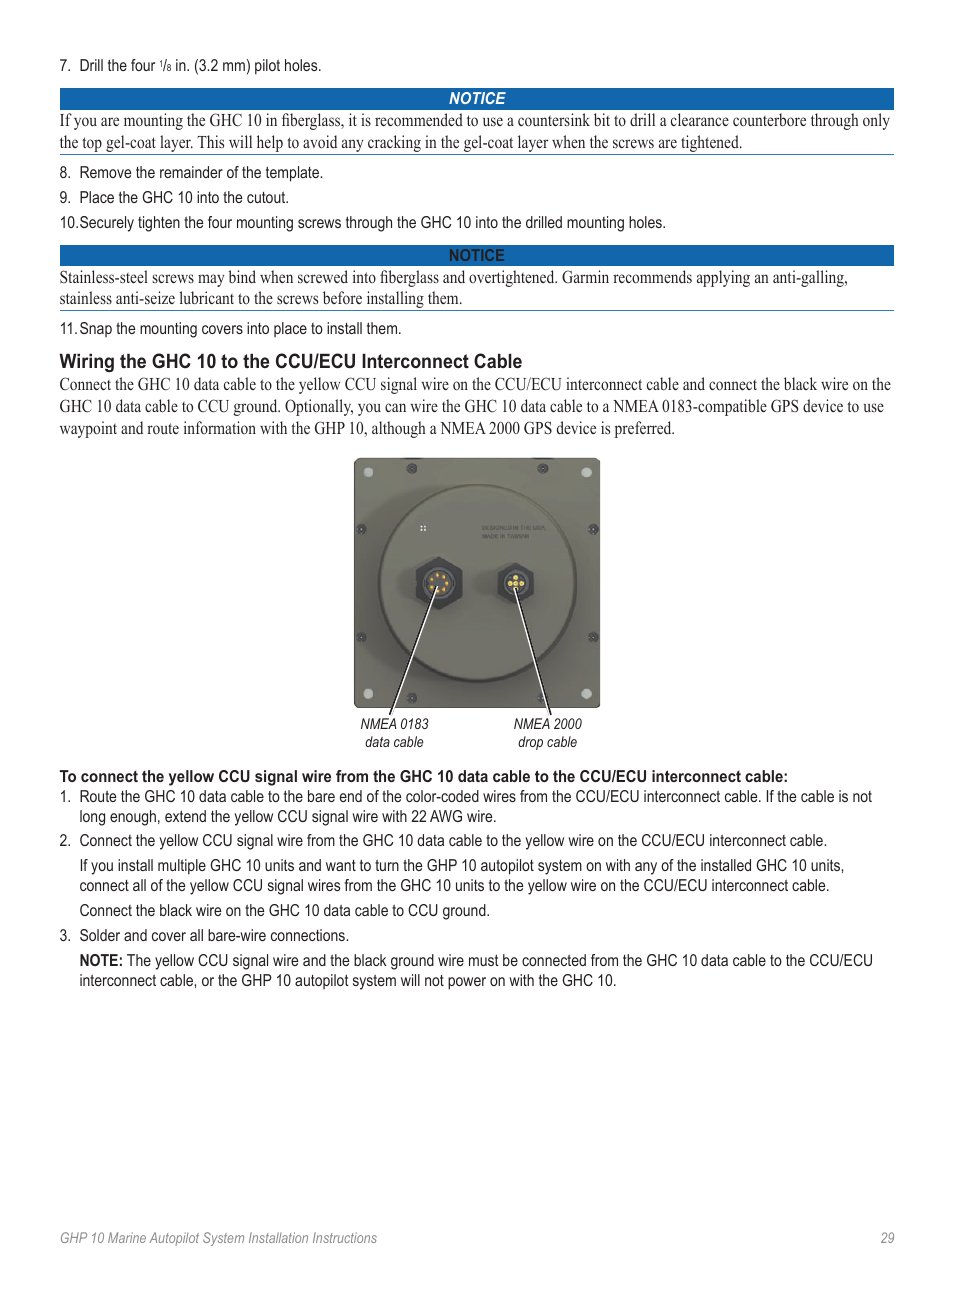 bifald Installere Duke Garmin part number: 320-00023-07) | Garmin GHP 10 User Manual | Page 29 /  48 | Original mode